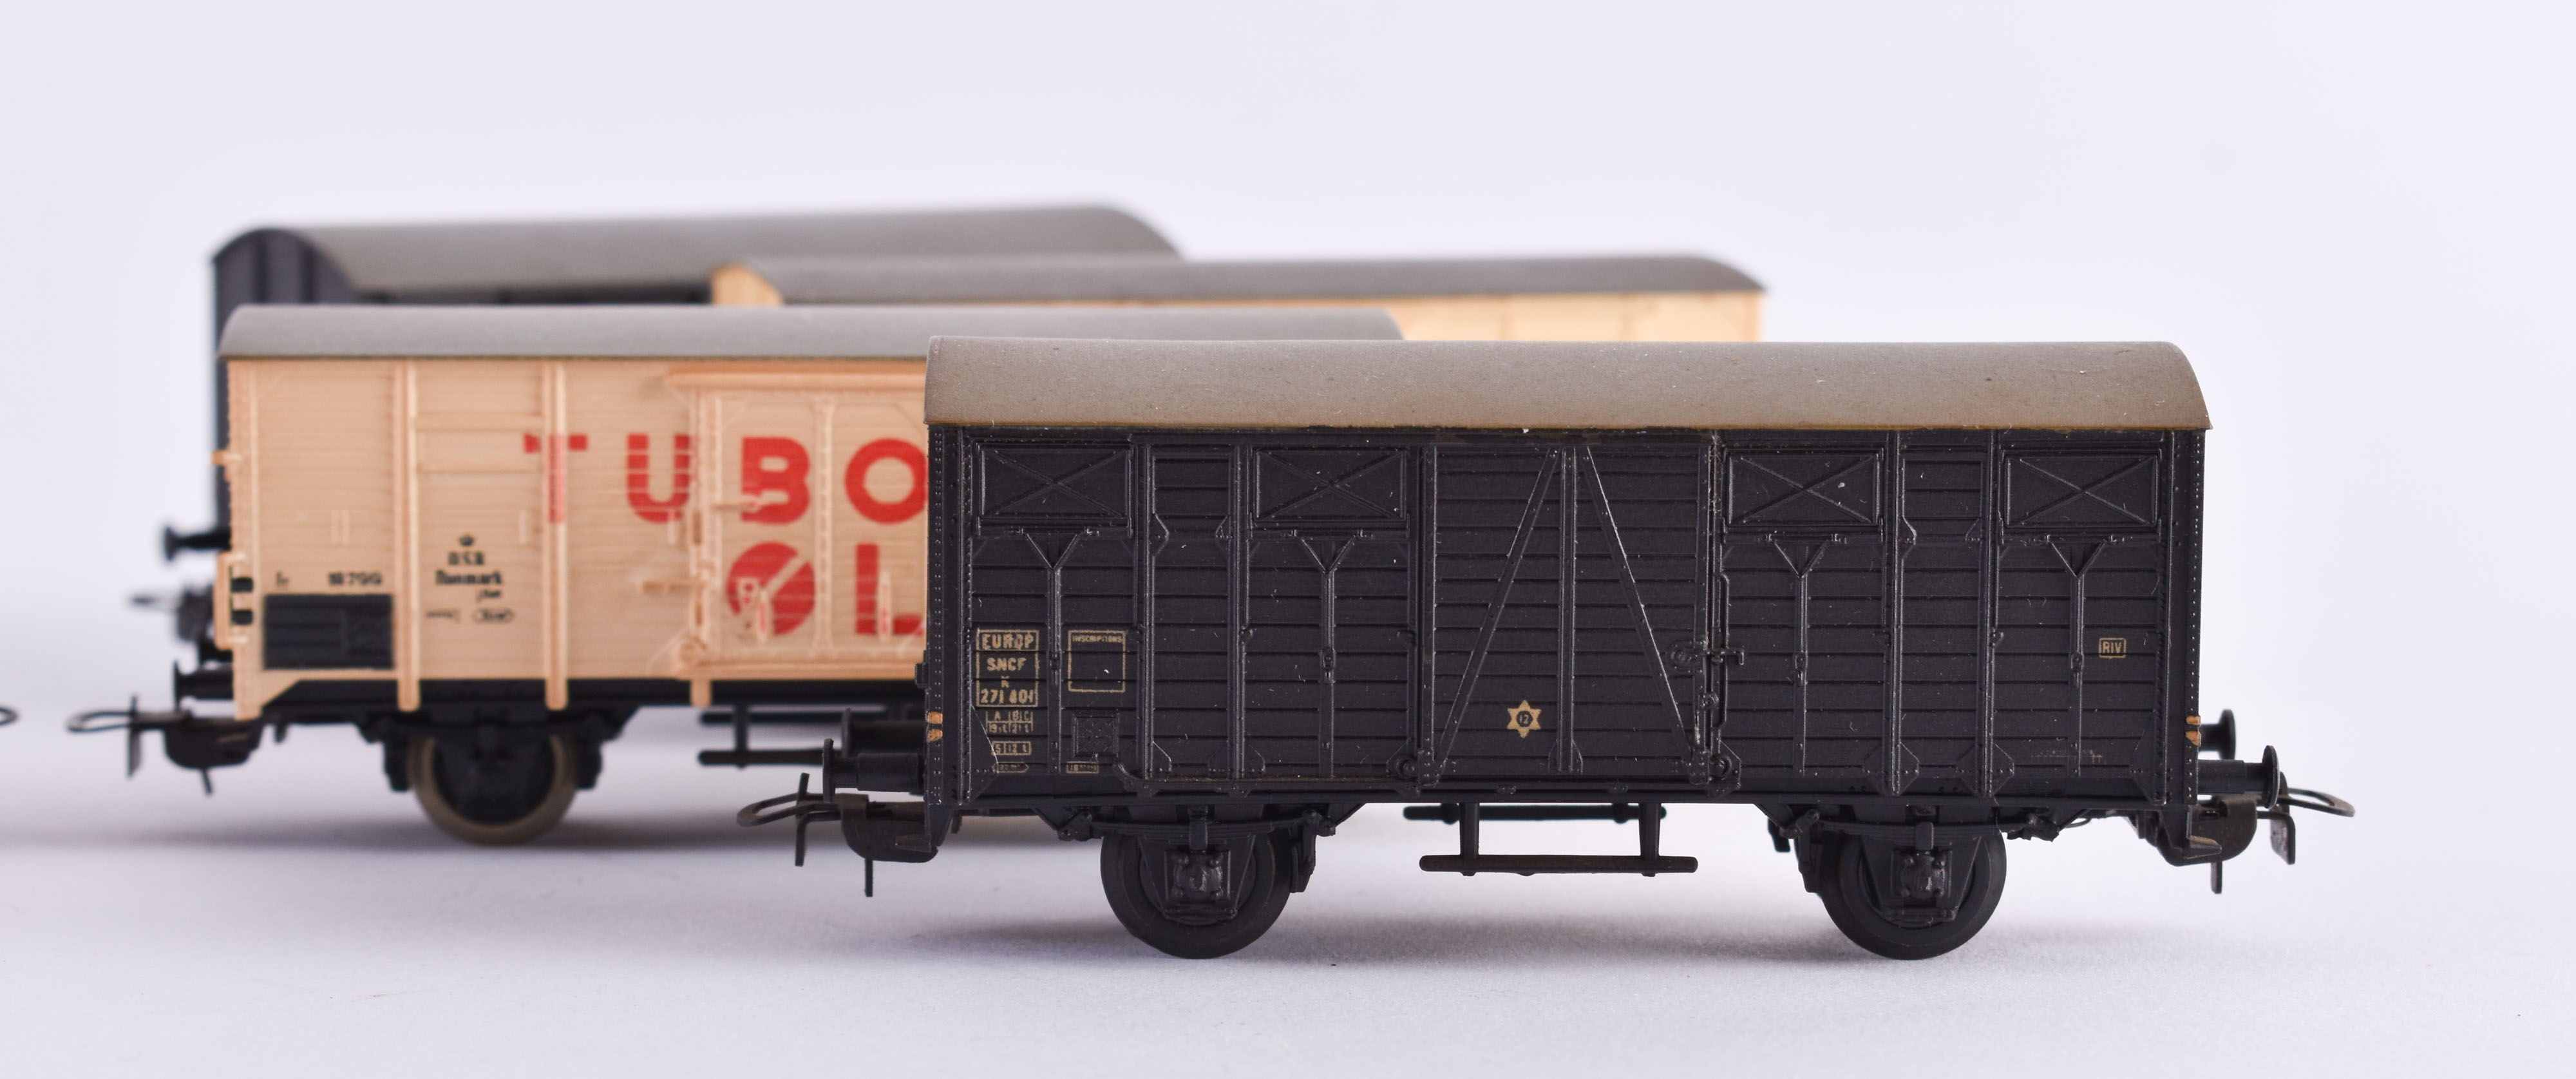 8 Piko goods wagons - Image 2 of 2